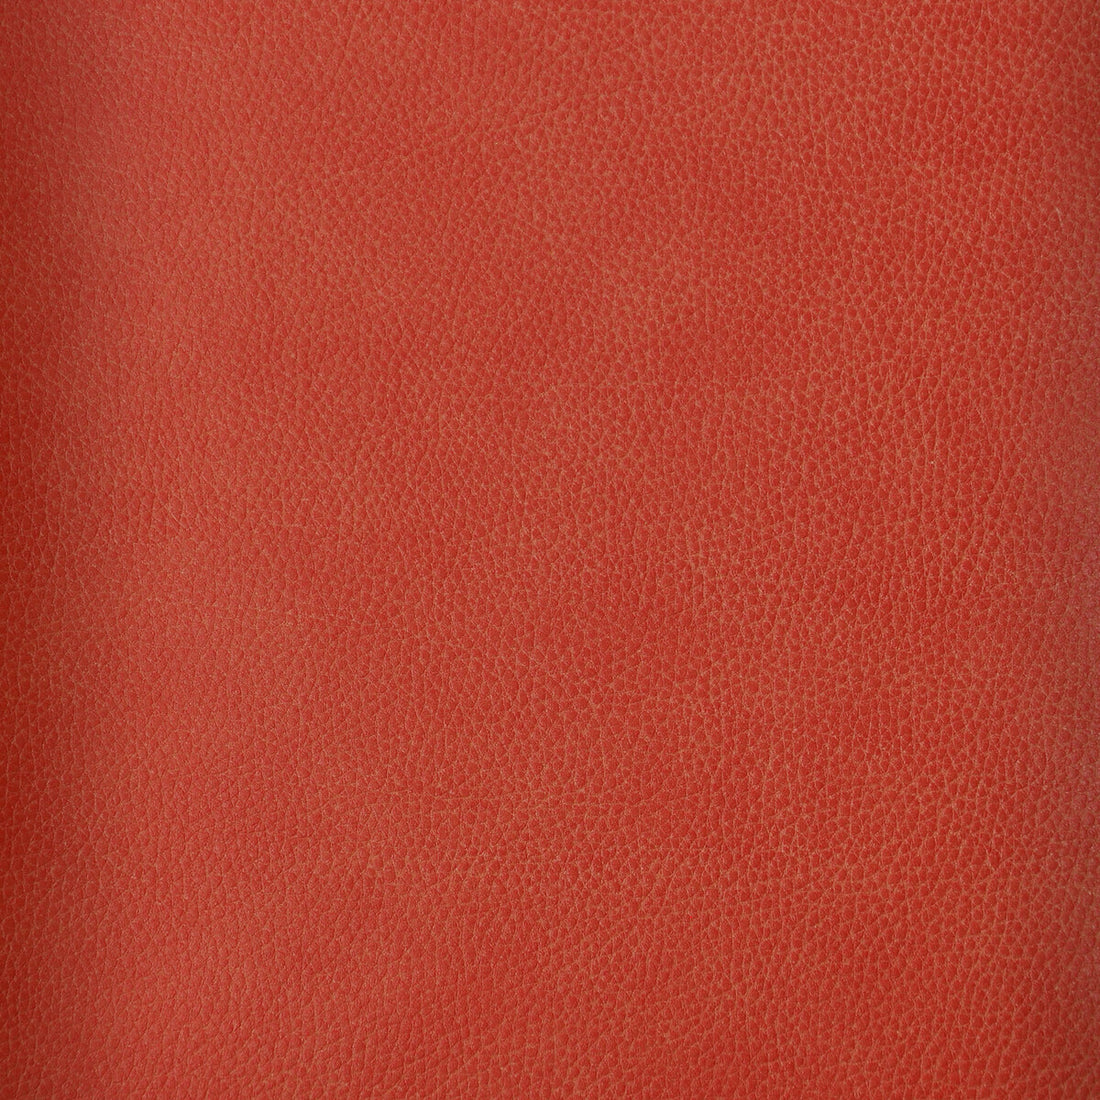 Kravet Design fabric in loris-124 color - pattern LORIS.124.0 - by Kravet Design